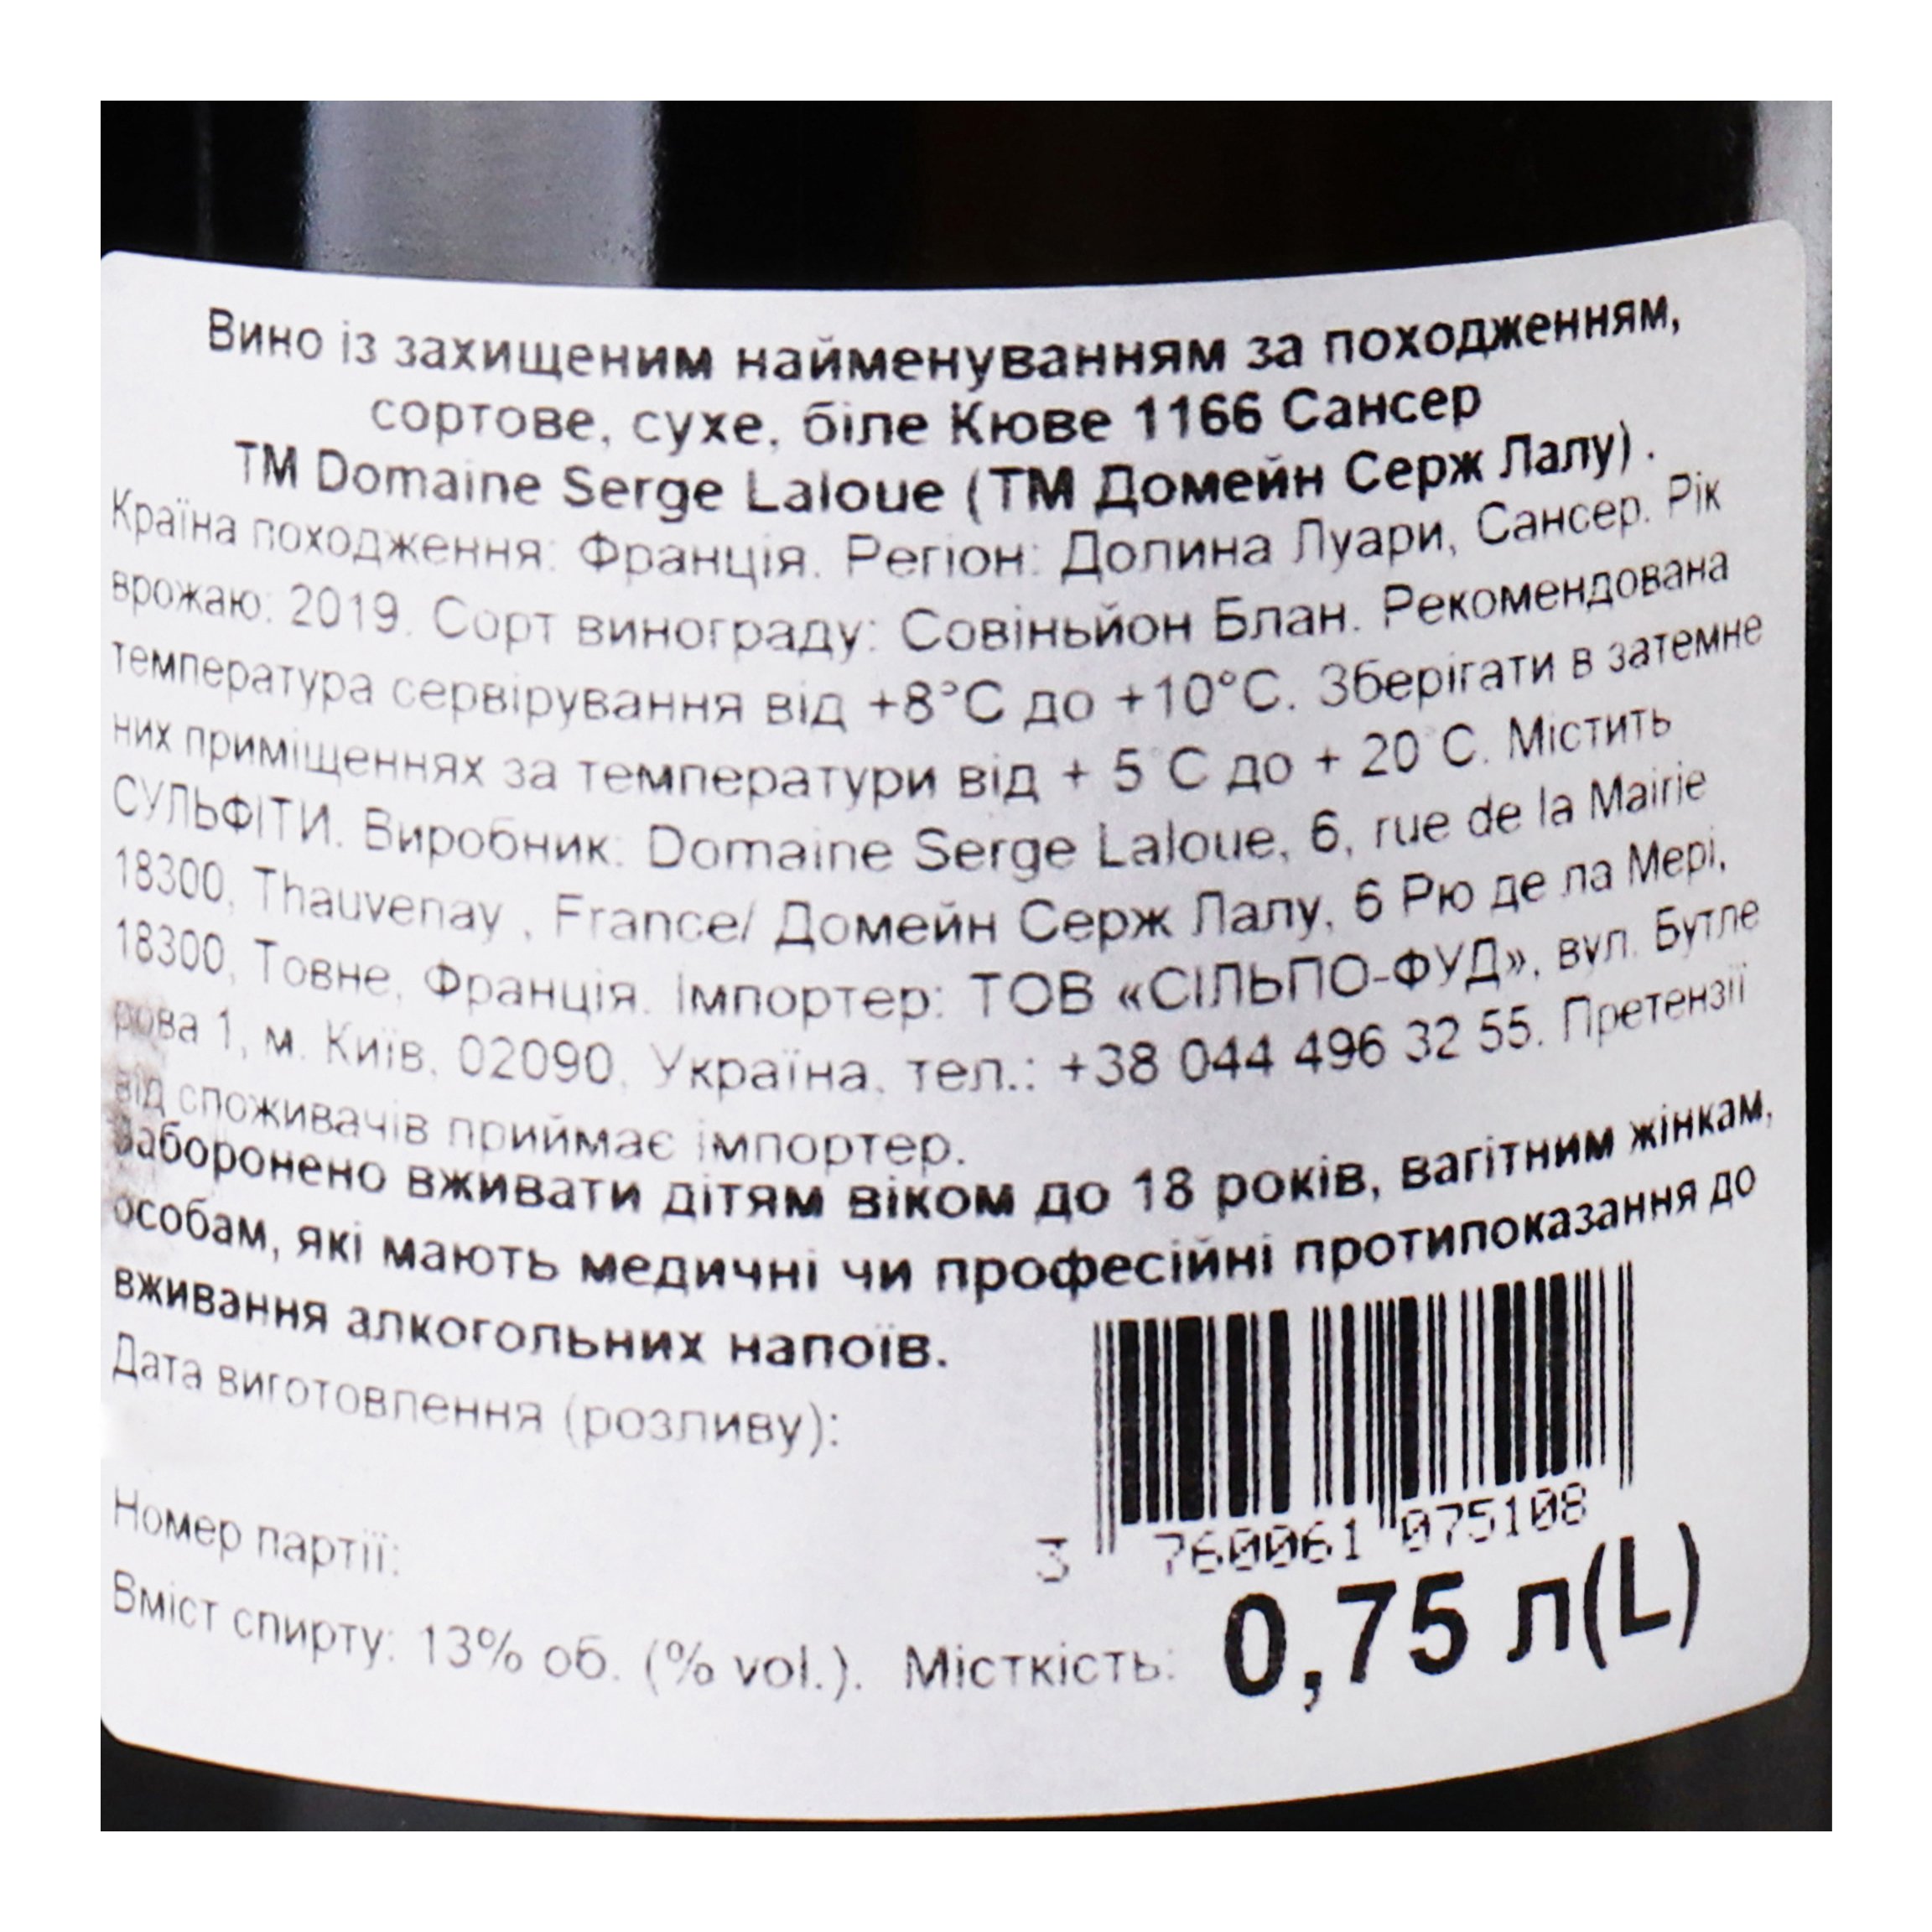 Вино Domaine Serge Laloue Sancerre Cuvee 1166, 2019 AOC, біле, сухе, 13%, 0,75 л (688 967) - фото 5